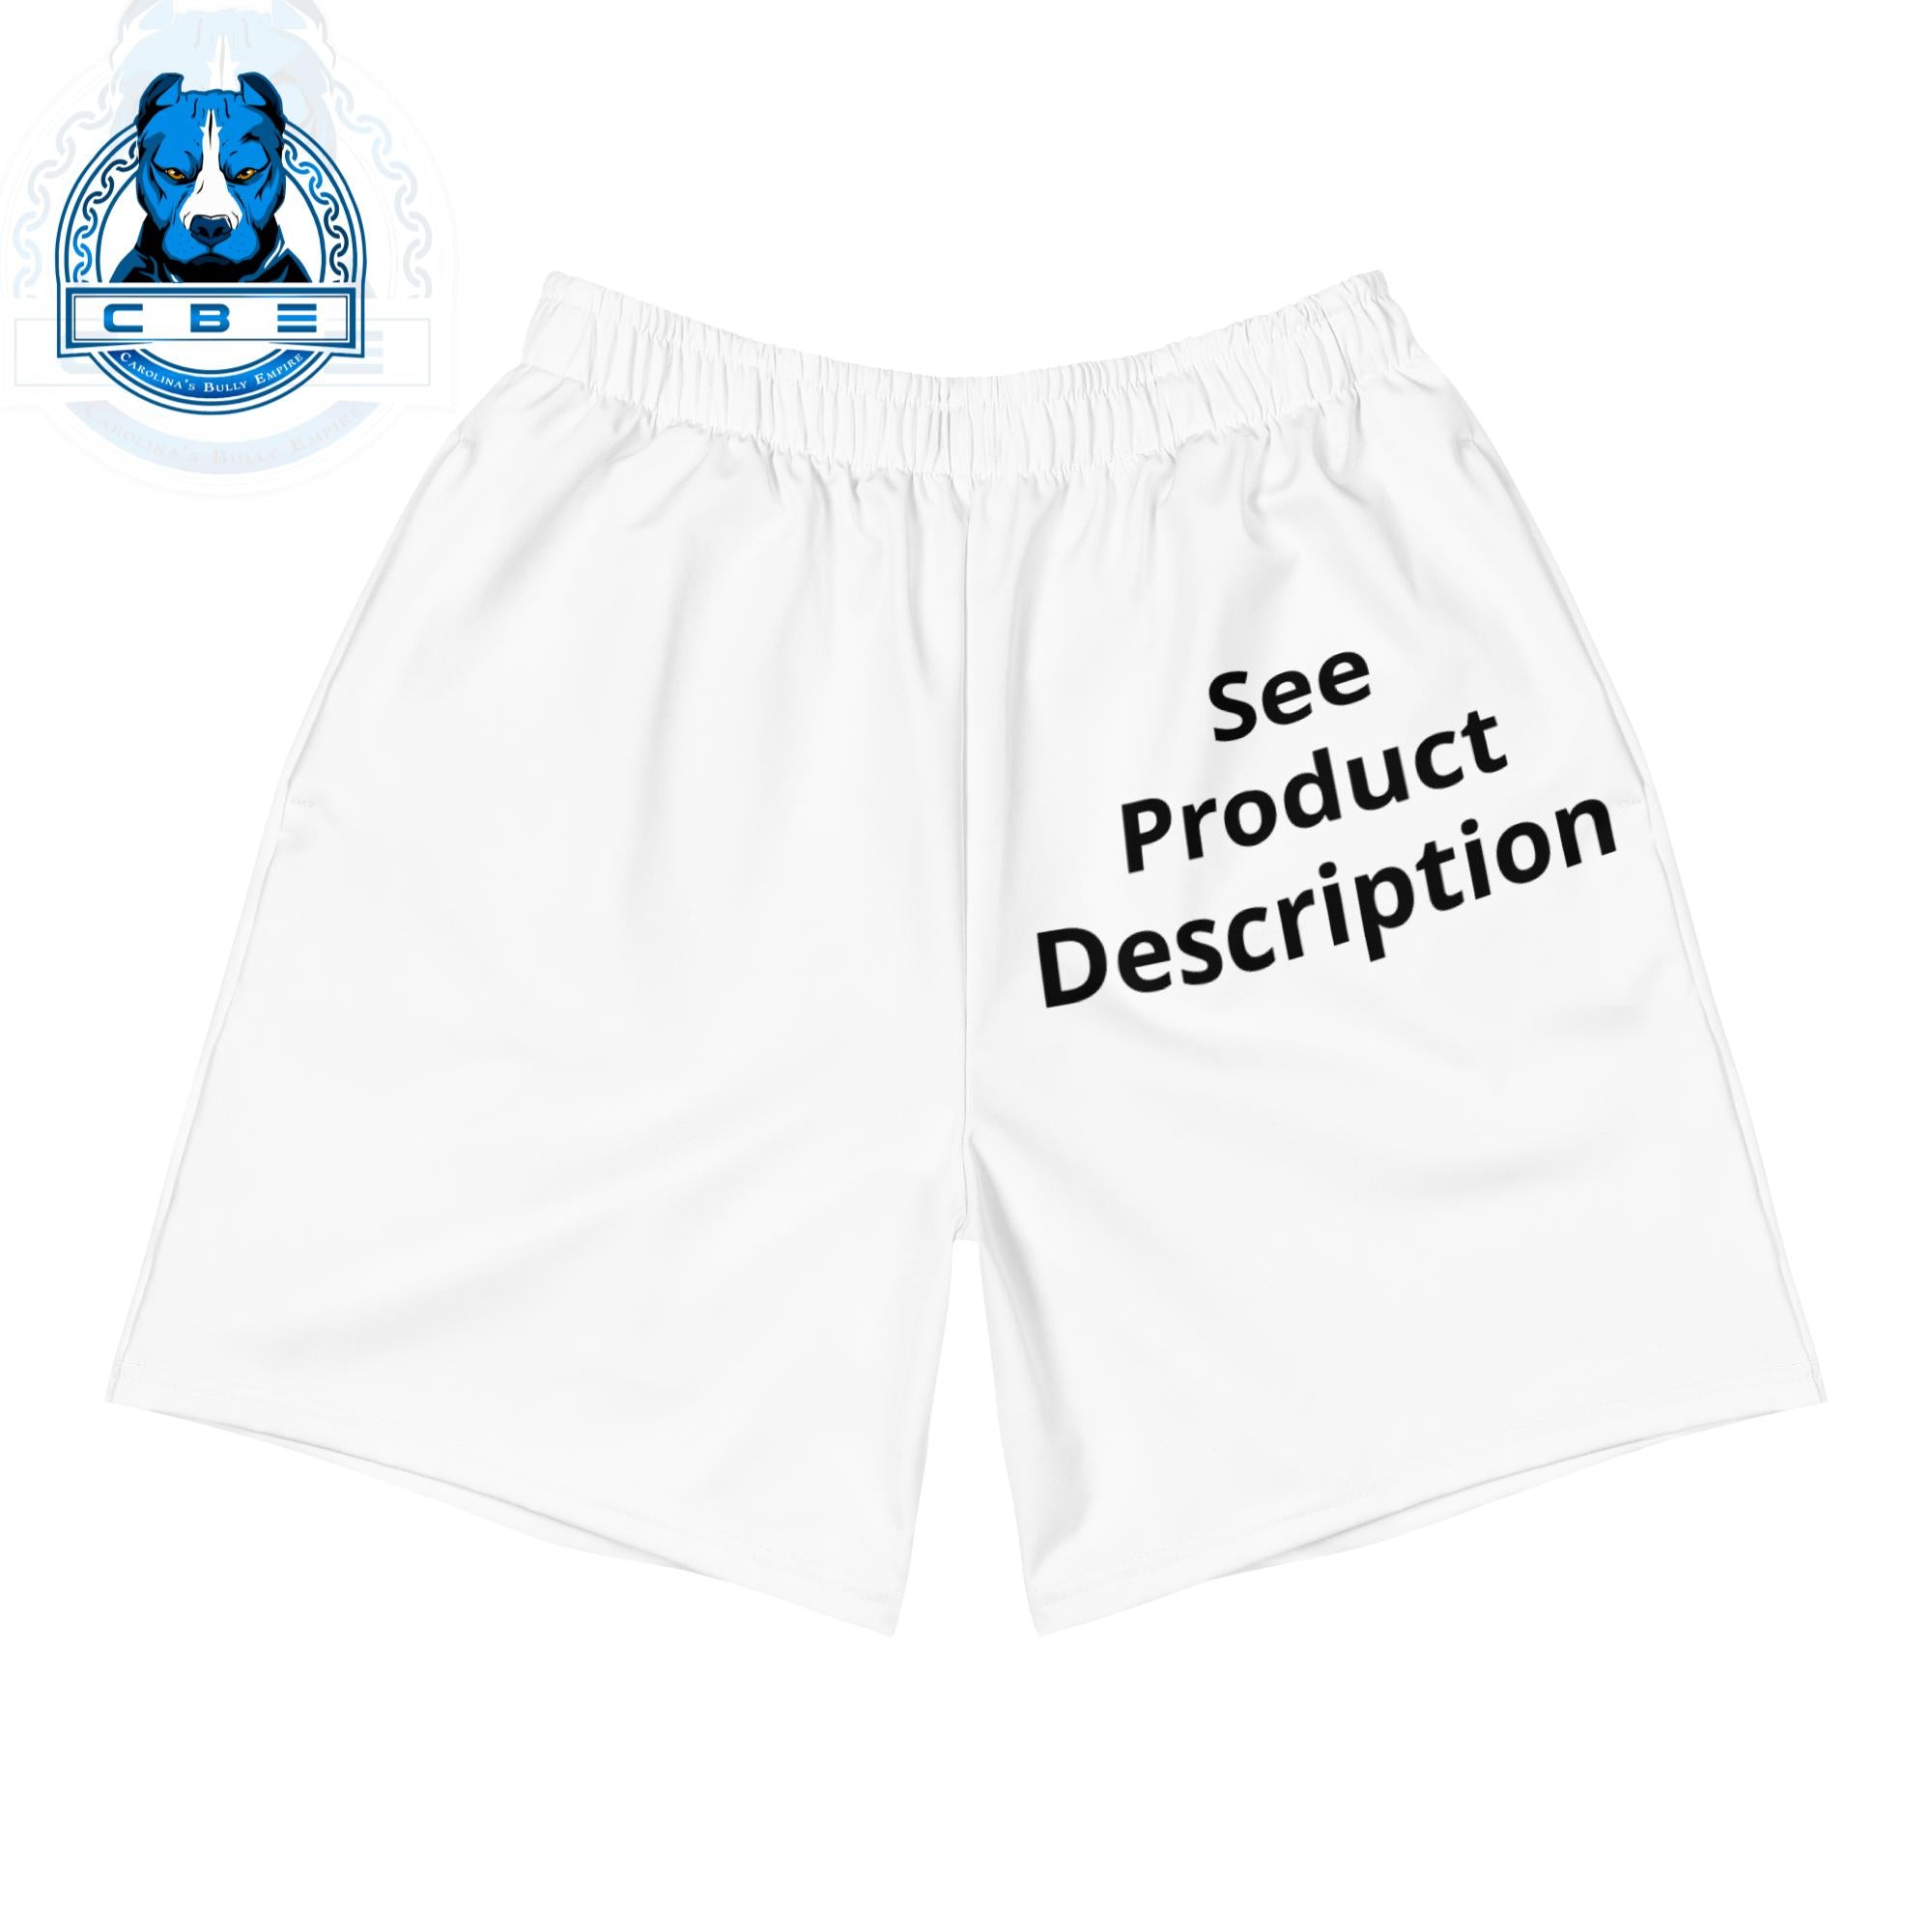 Customizable Men's Athletic Shorts